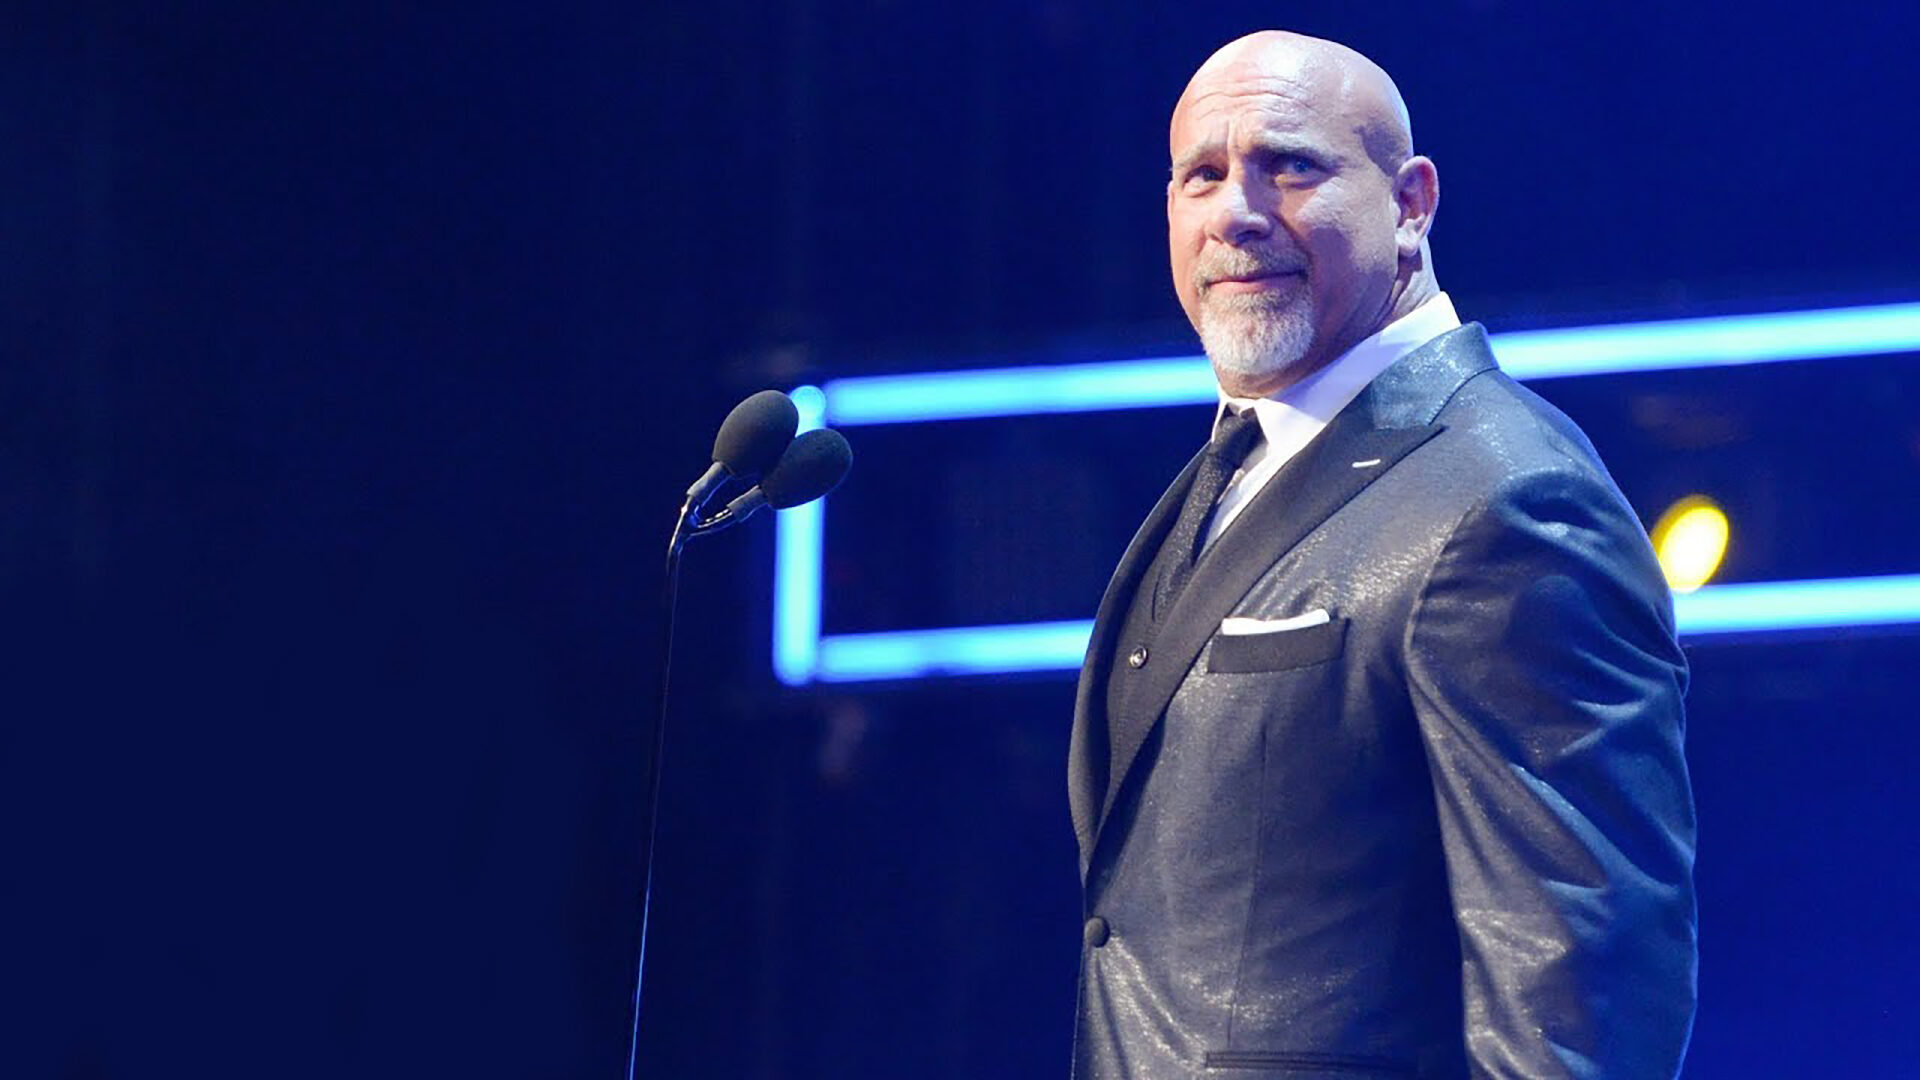 Goldberg Provides Major Update On His Wrestling Future